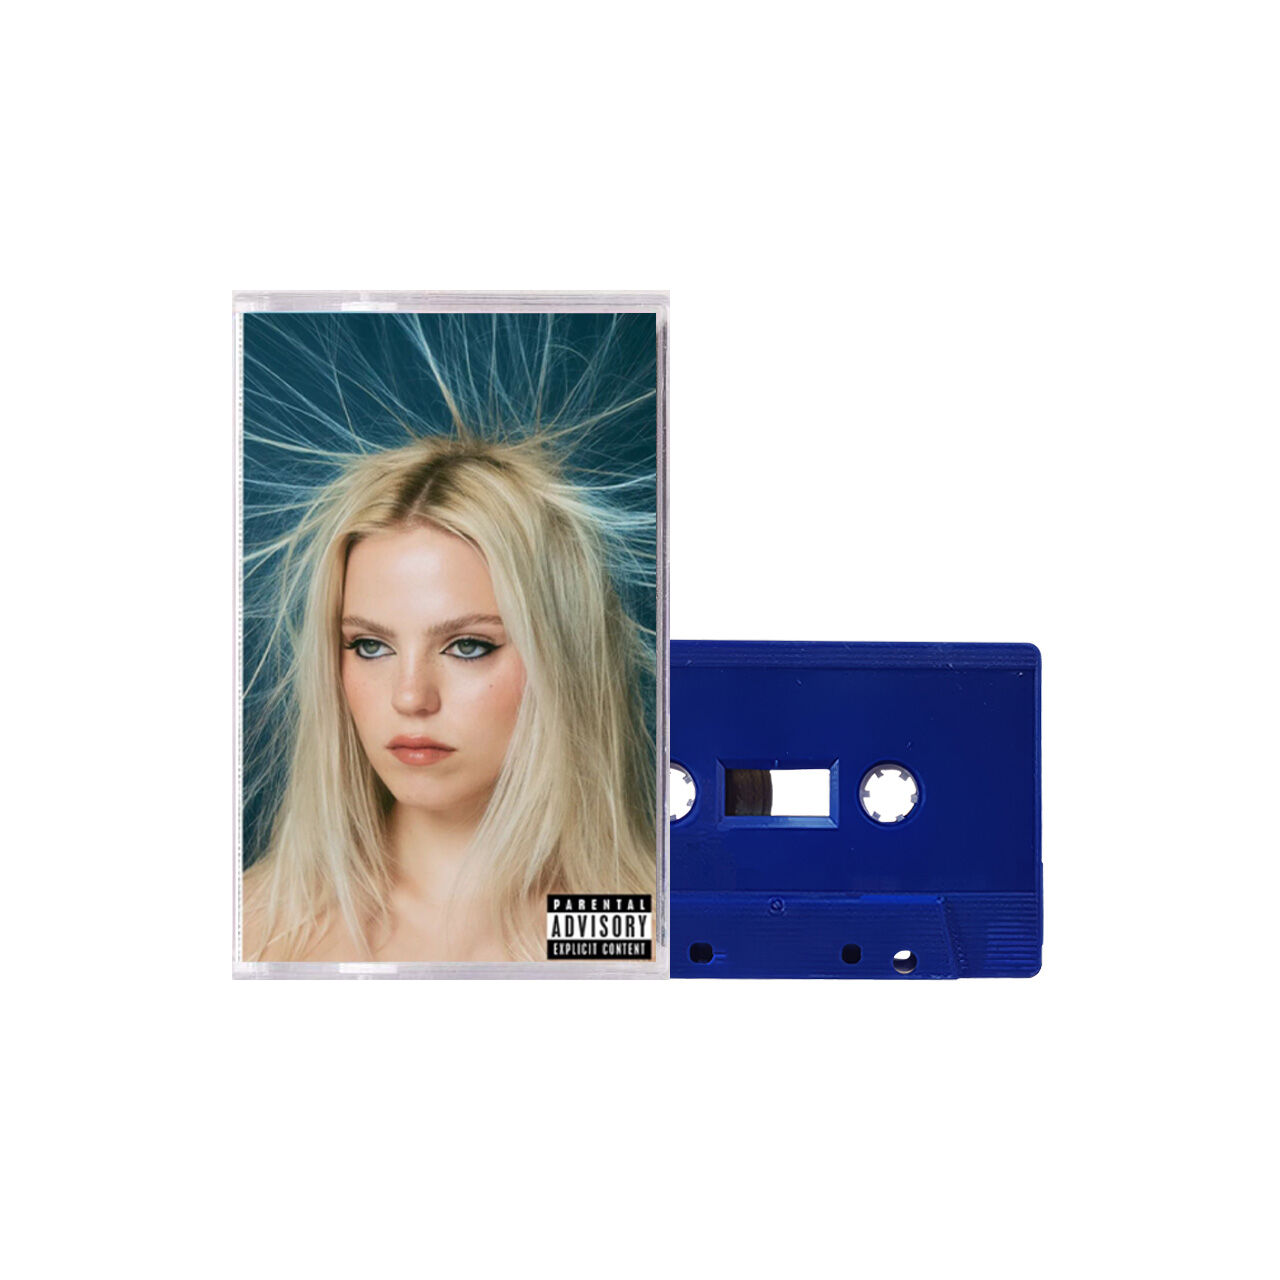 RENEE RAPP Snow Angel EXC Blue Jewel Case Cassette